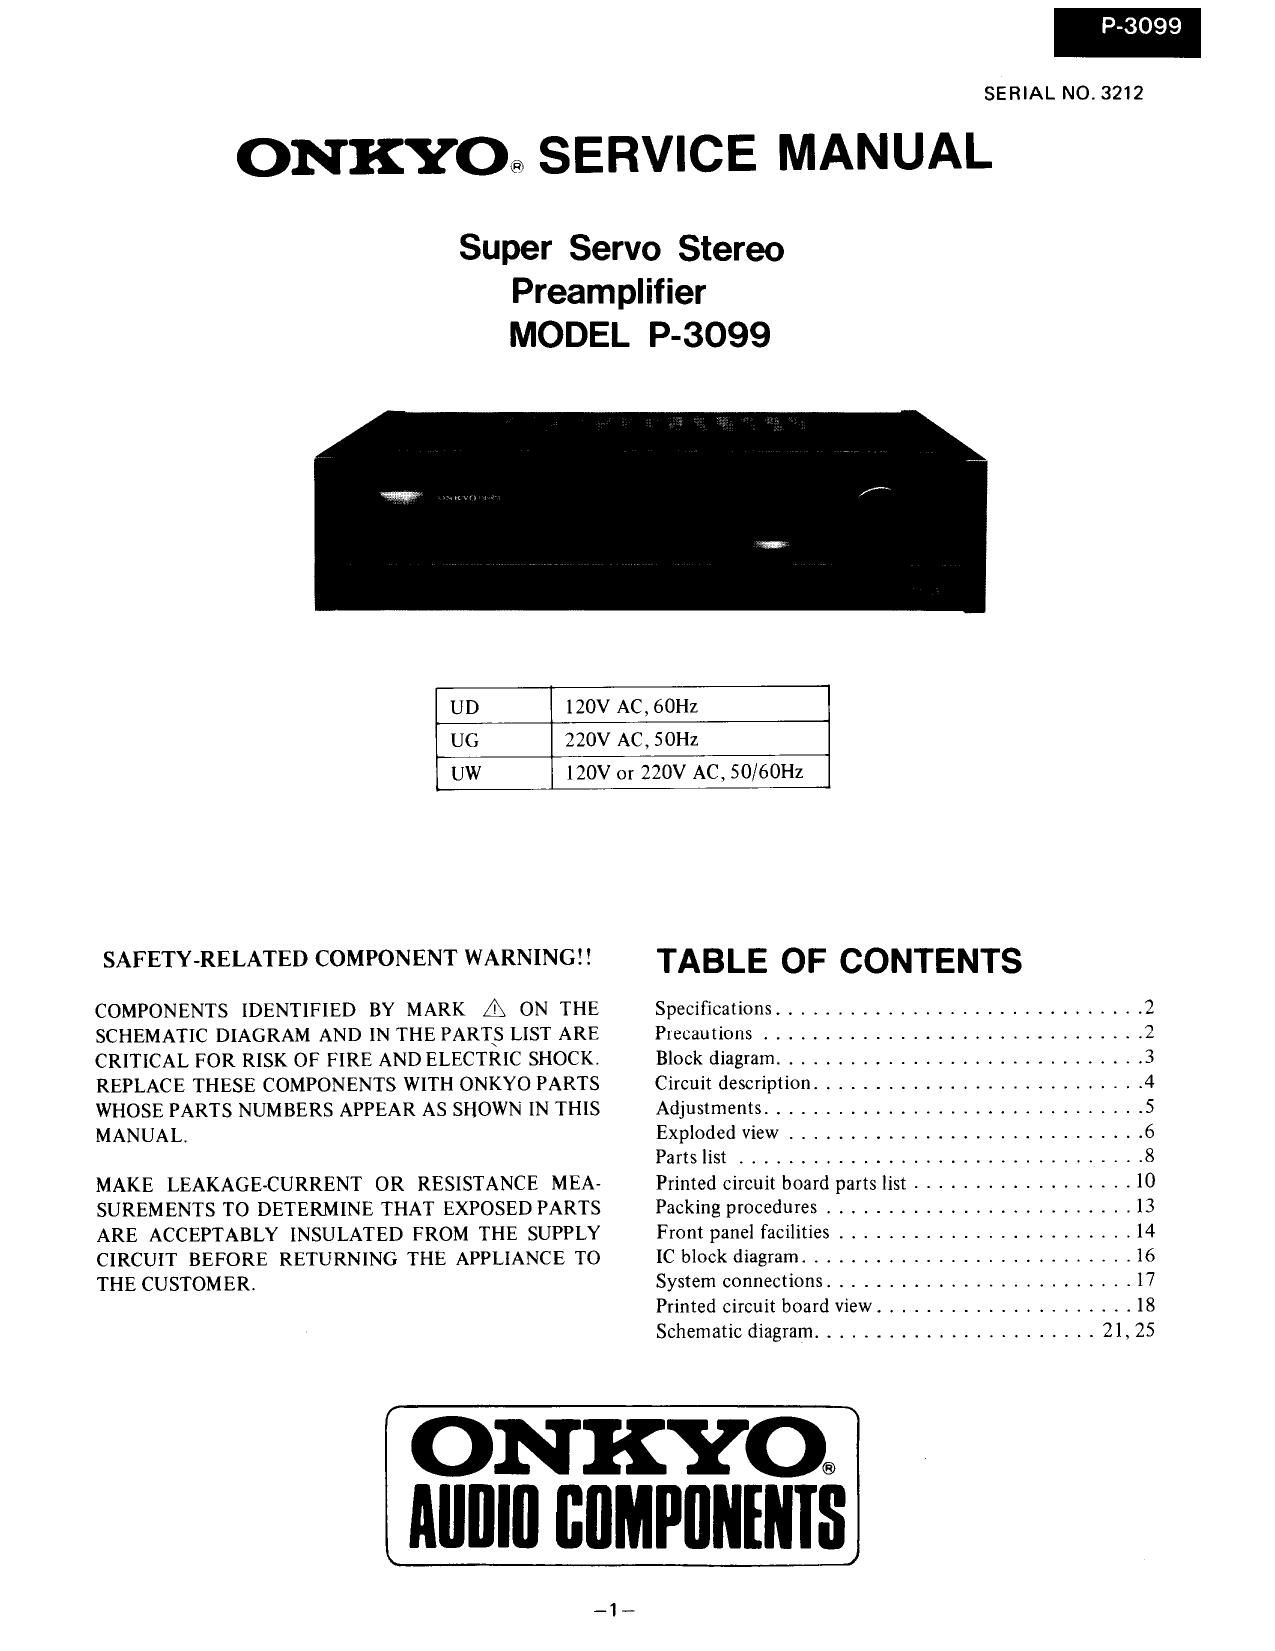 Onkyo P 3099 Service Manual